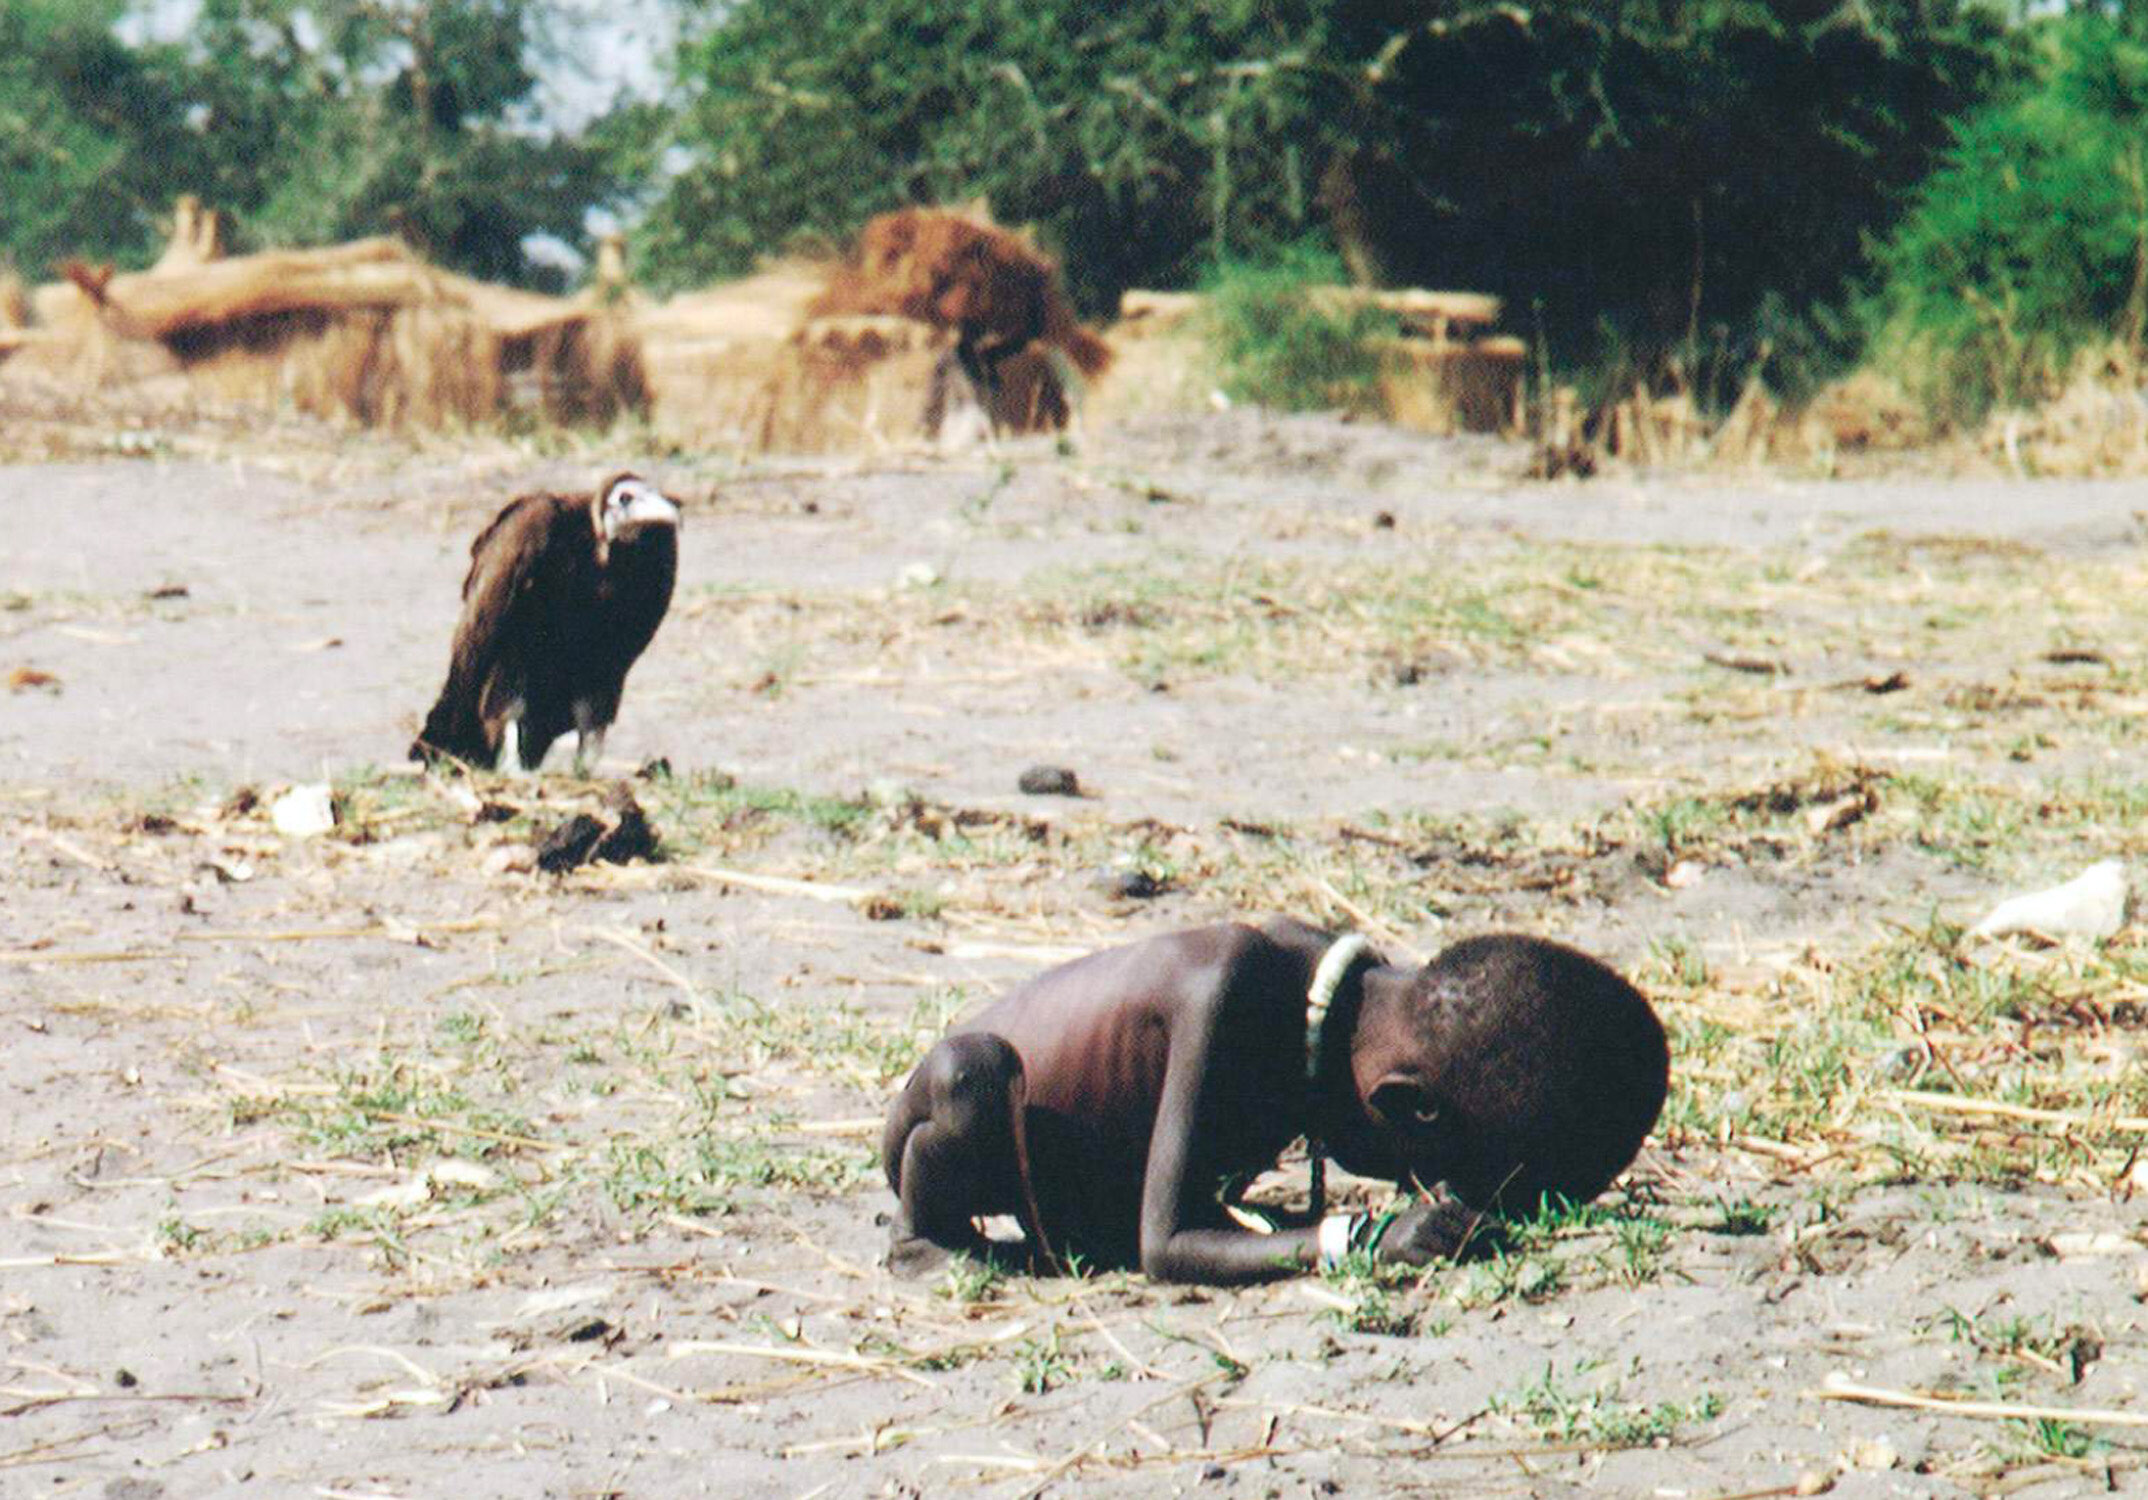 Kevin Carter’s Pulitzer Winning photo, Vulture.